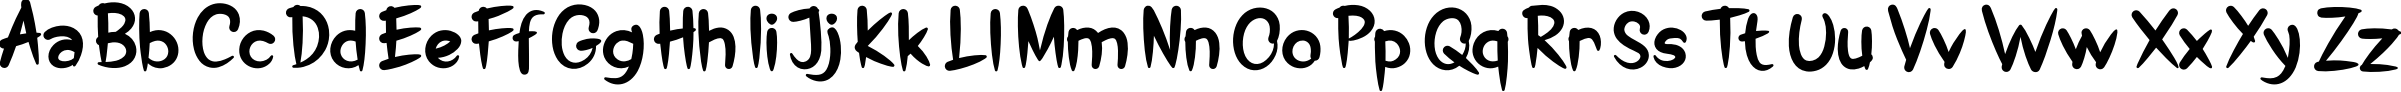 Пример написания английского алфавита шрифтом Twinkle